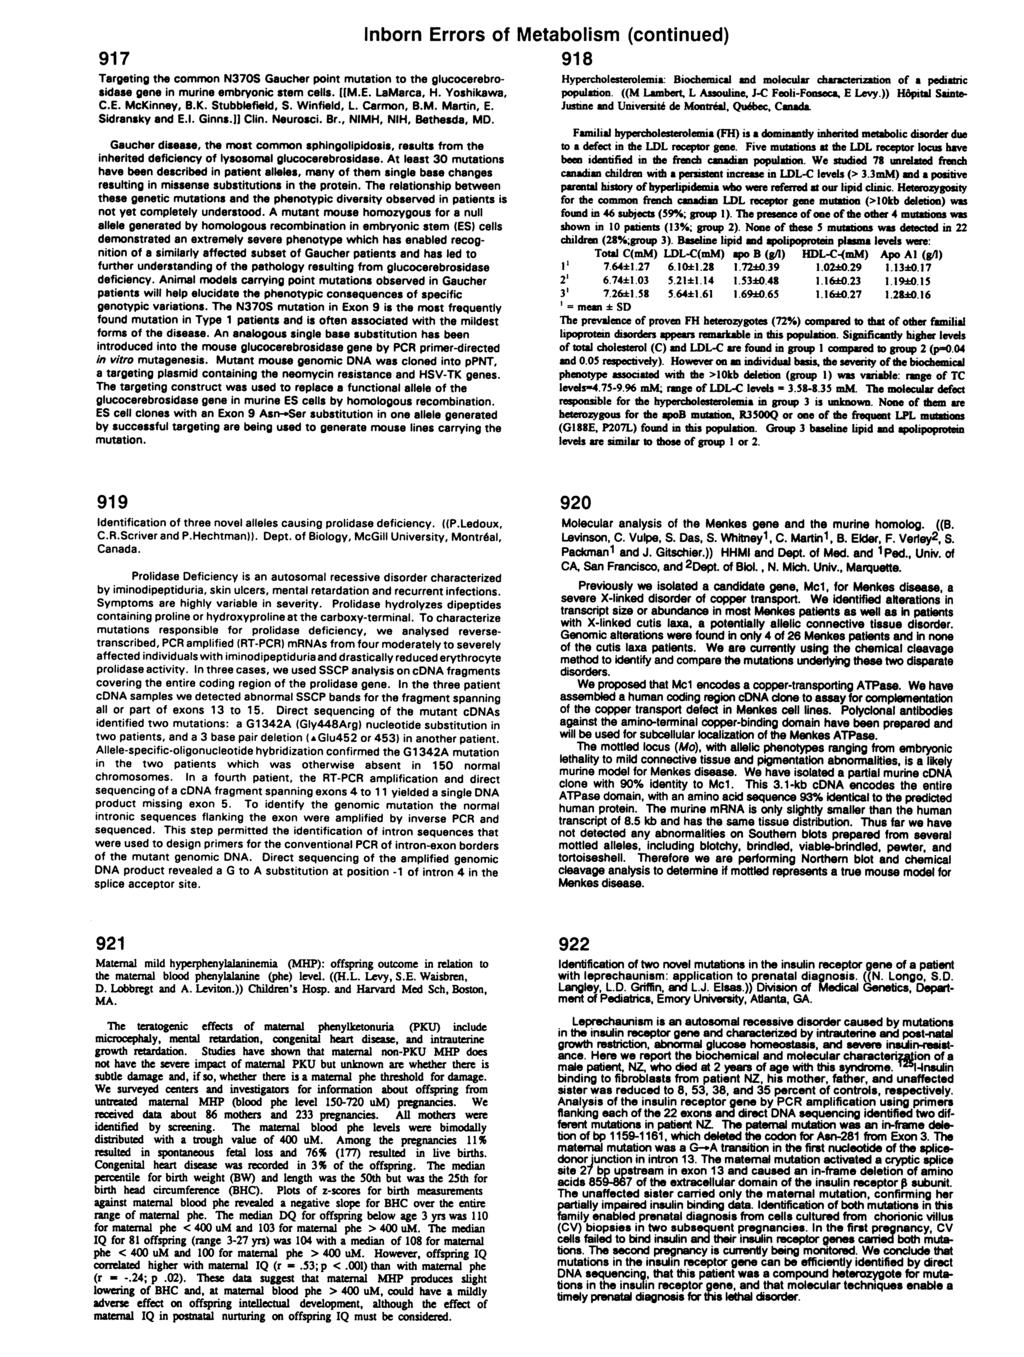 917 Targeting the common N370S Gaucher point mutation to the glucocerebrosidase gone in murine embryonic stem celia. [[M.E. LaMarca, H. Yoshikawa, C.E. McKinney, B.K. Stubblefield, S. Winfield, L.